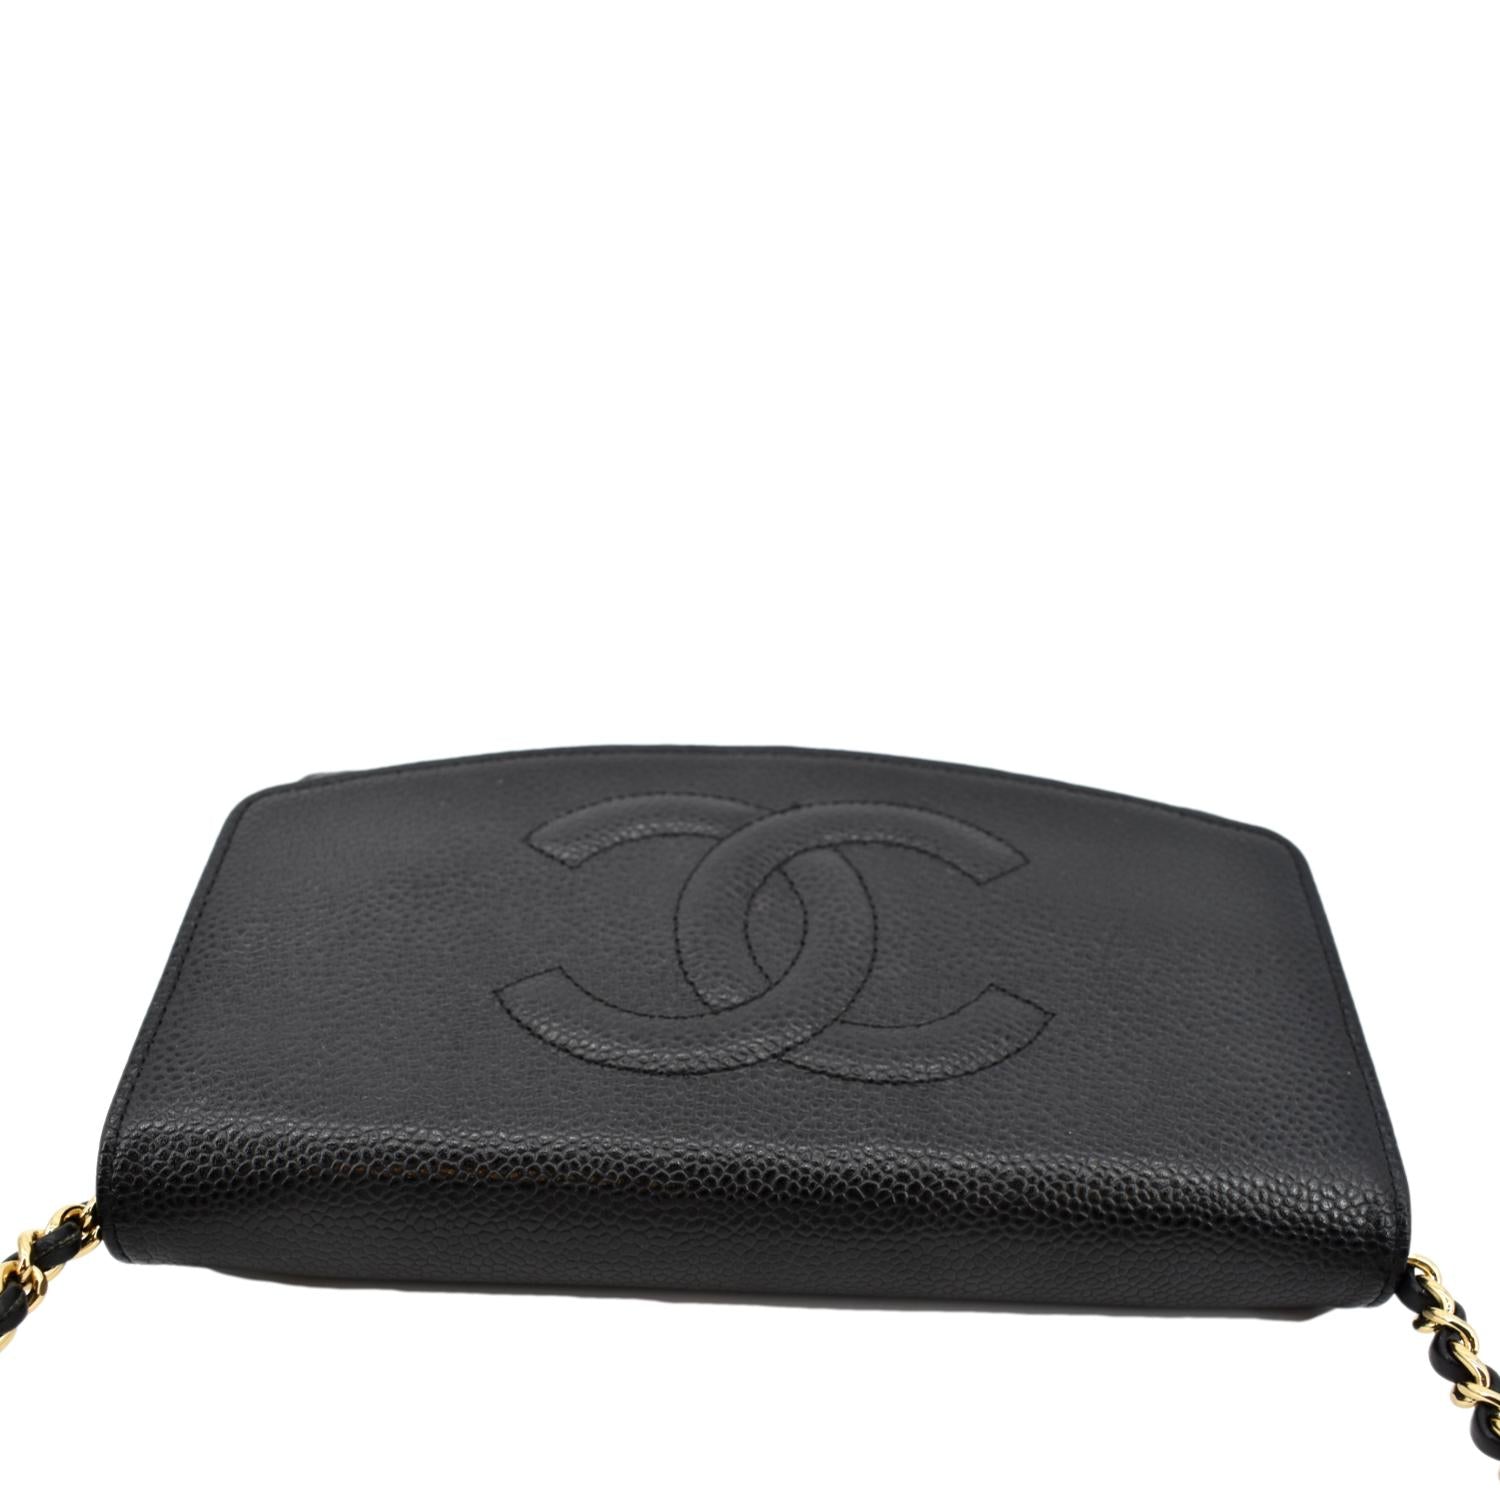 FWRD Renew Chanel Caviar Small Chain Shoulder Bag in Black